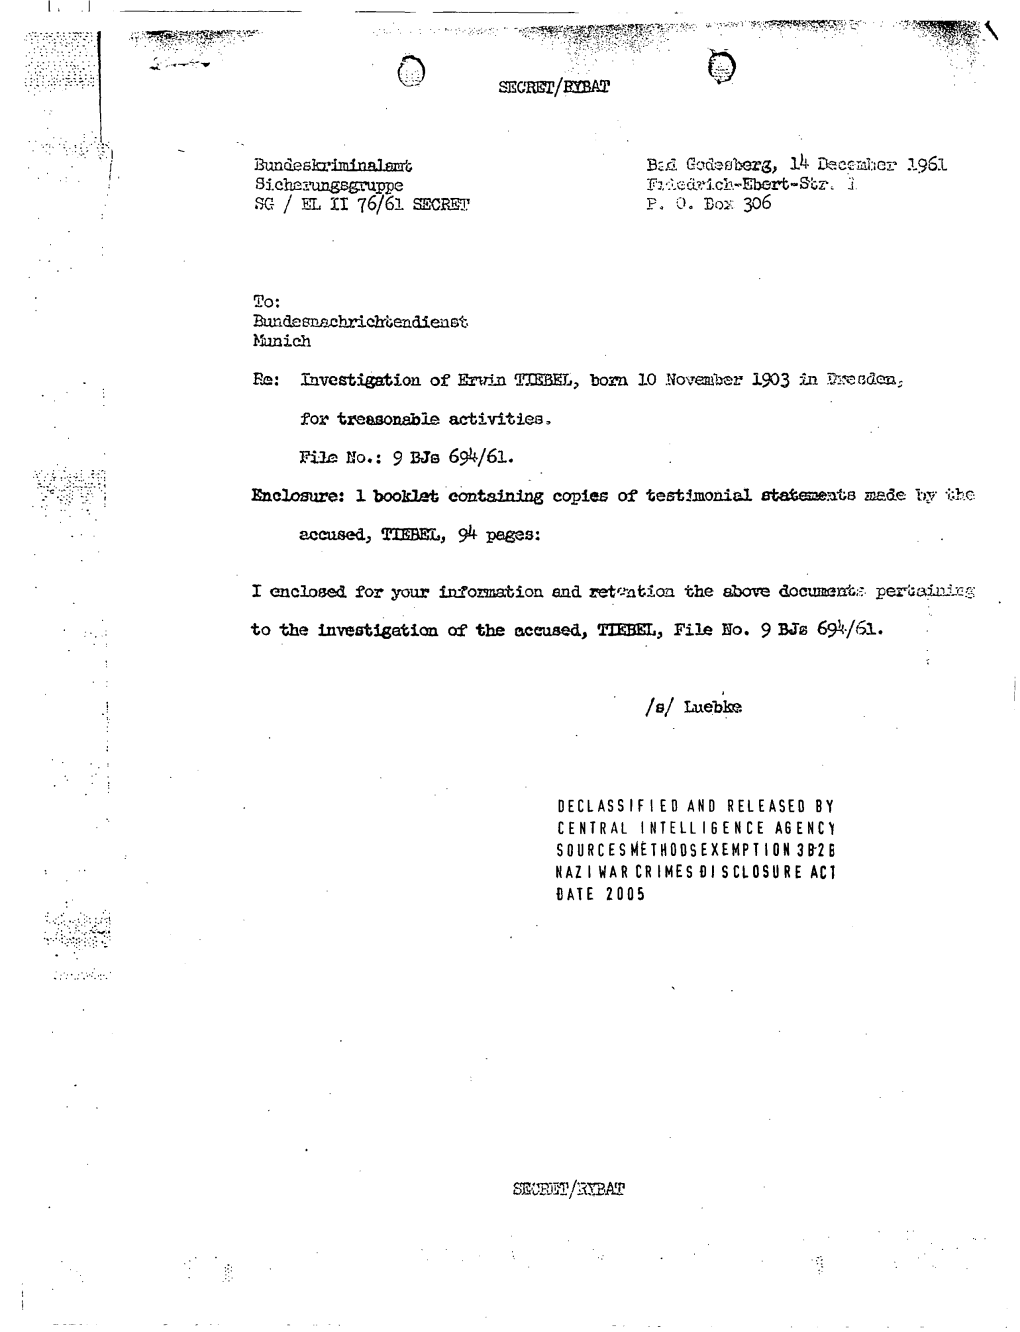 Bundeskriminalamt Bzd Godeoberg„ 14 Deccmlicr 1961